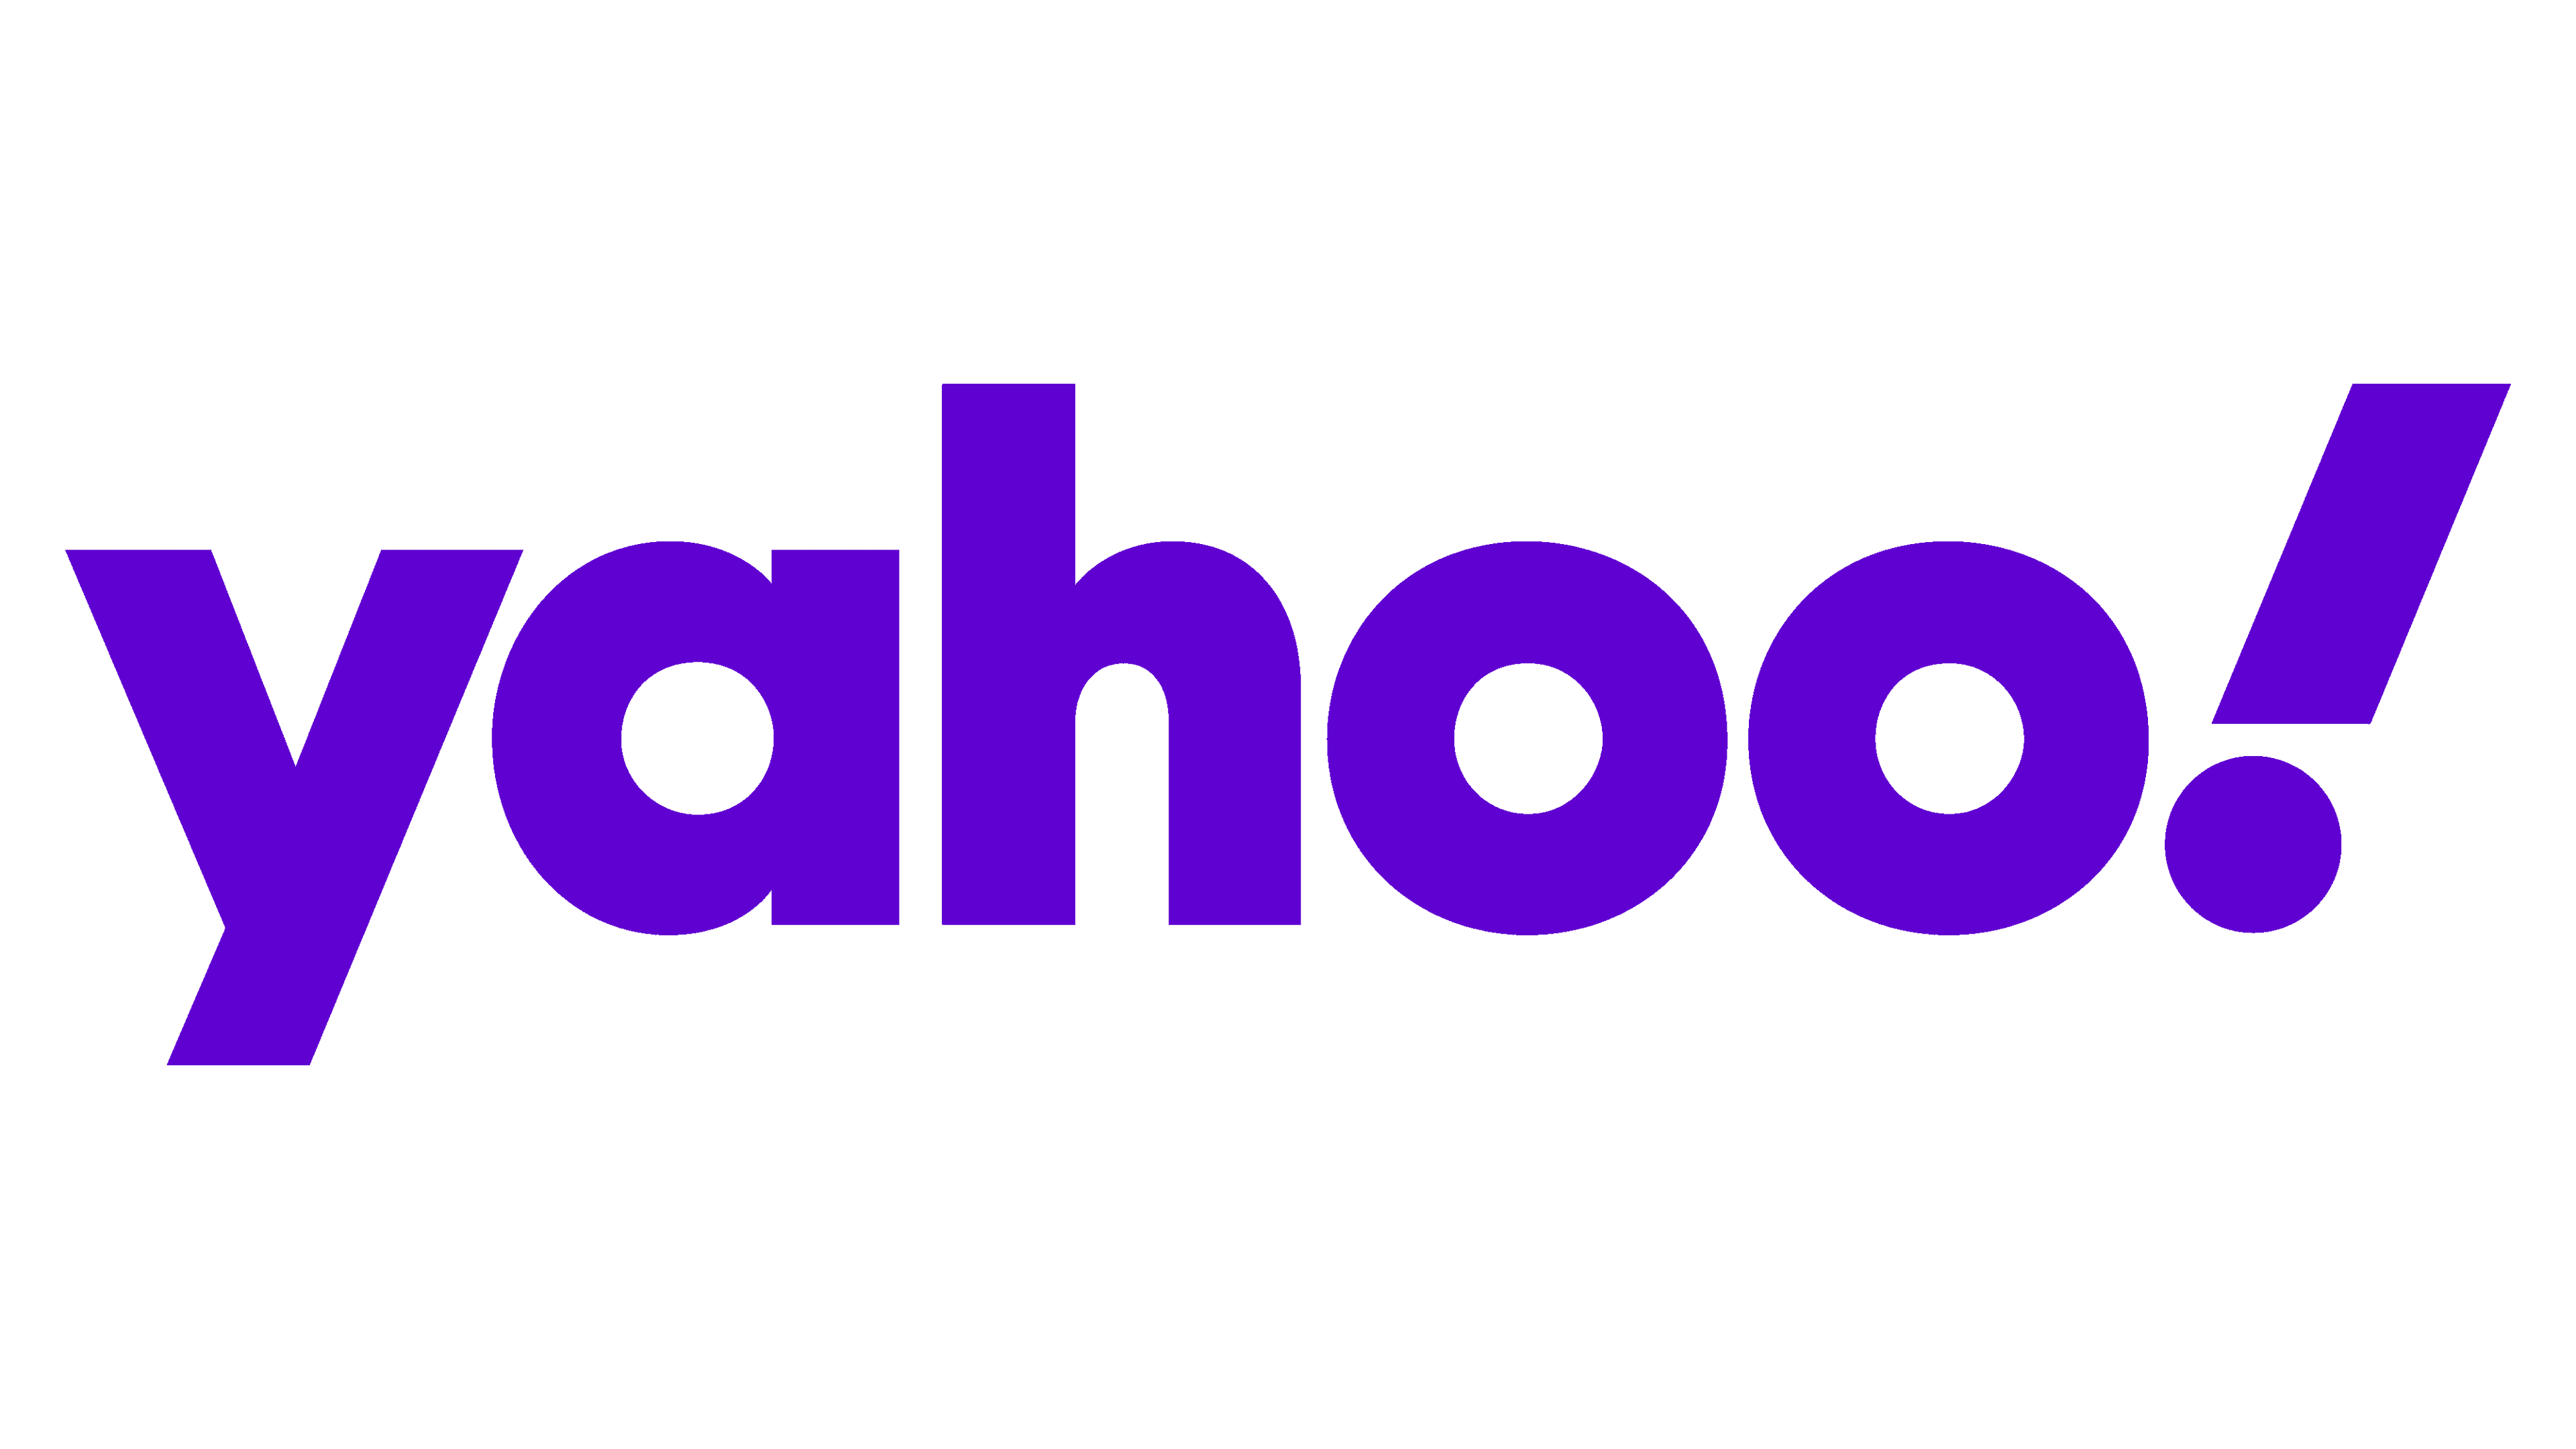 Yahoo Logo Logo